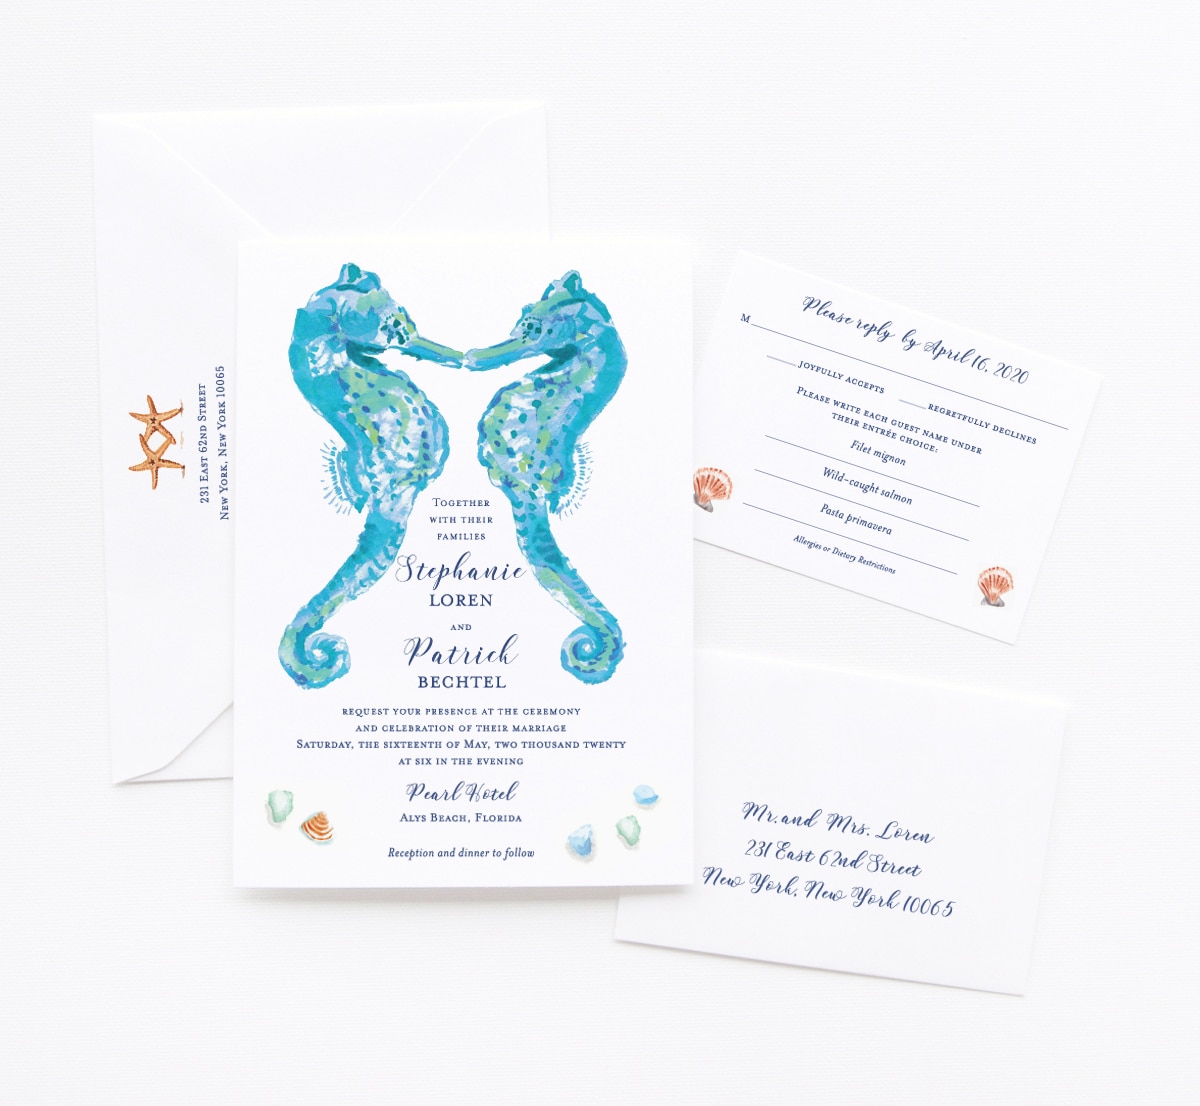 27 Sea-worthy Nautical Wedding Invitations. Watercolor Seahorses Wedding Crest custom wedding invitations by artist Michelle Mospens. | Mospens Studio